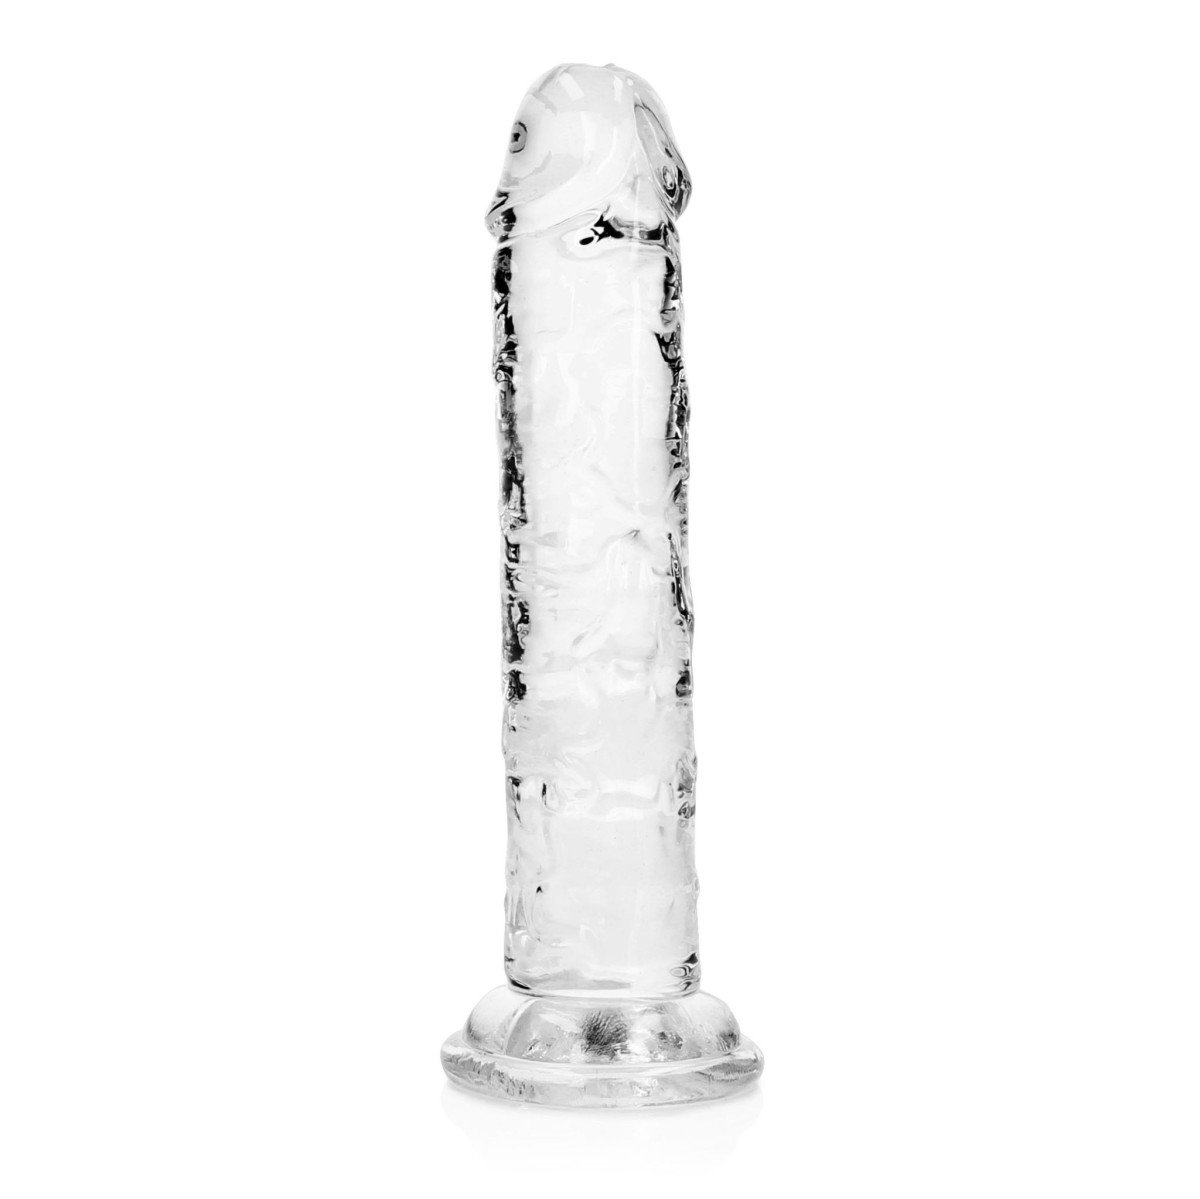 Gelové dildo RealRock Crystal Clear Realistic 6″ průhledné, dildo s přísavkou 15,5 x 2,8 cm